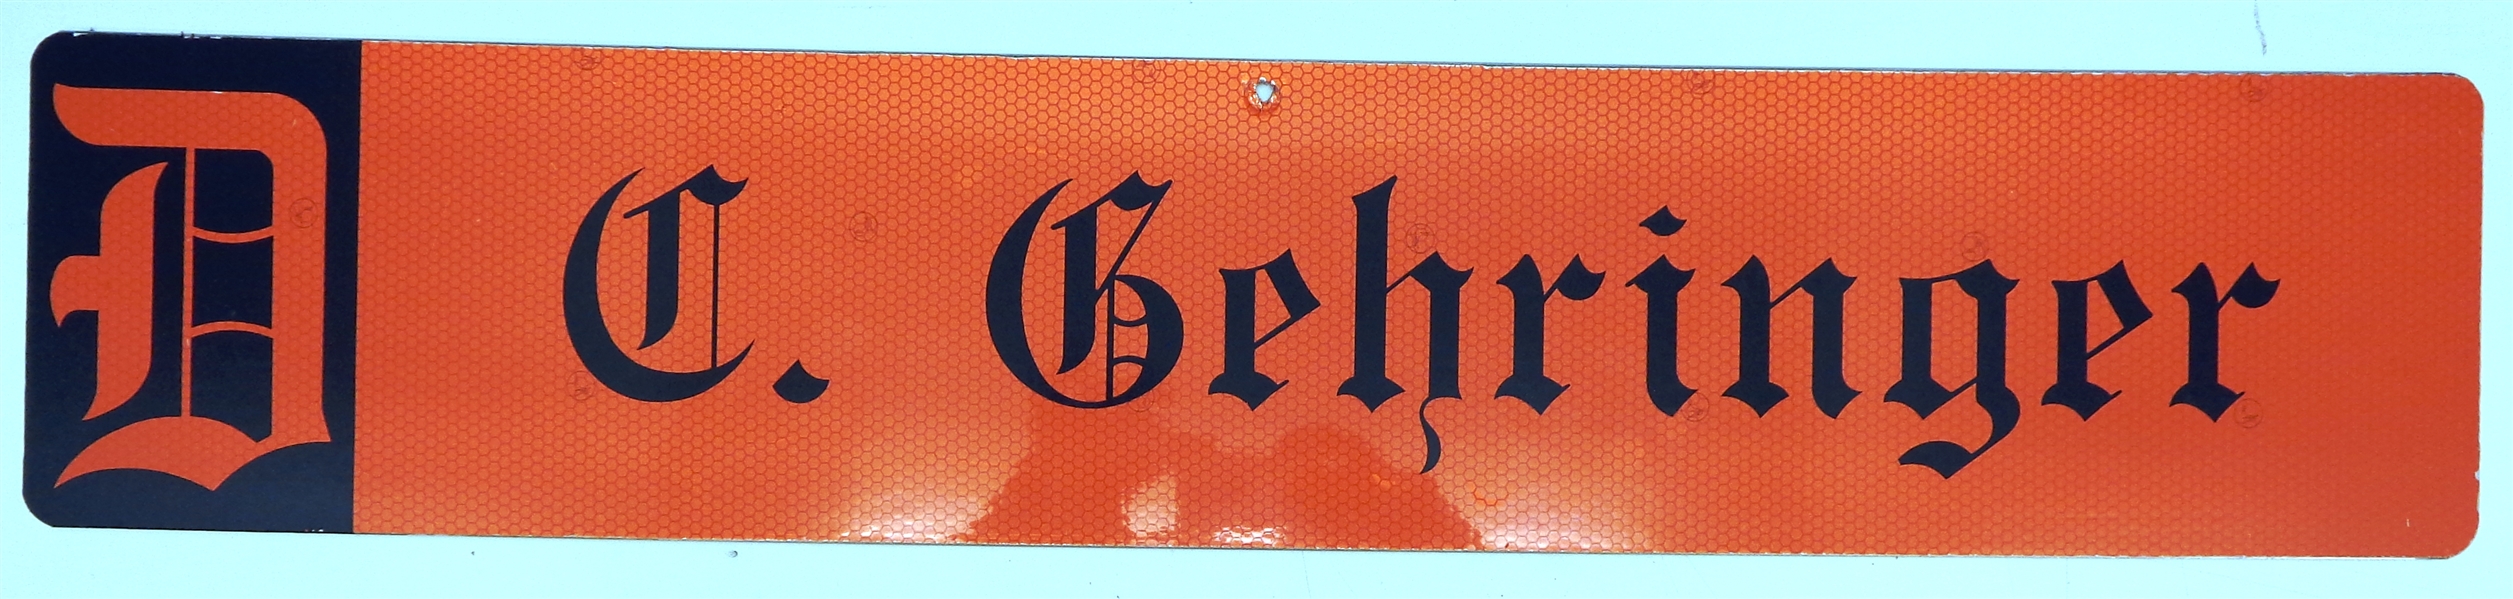 Charlie Gehringer 6x30 Custom Street Sign